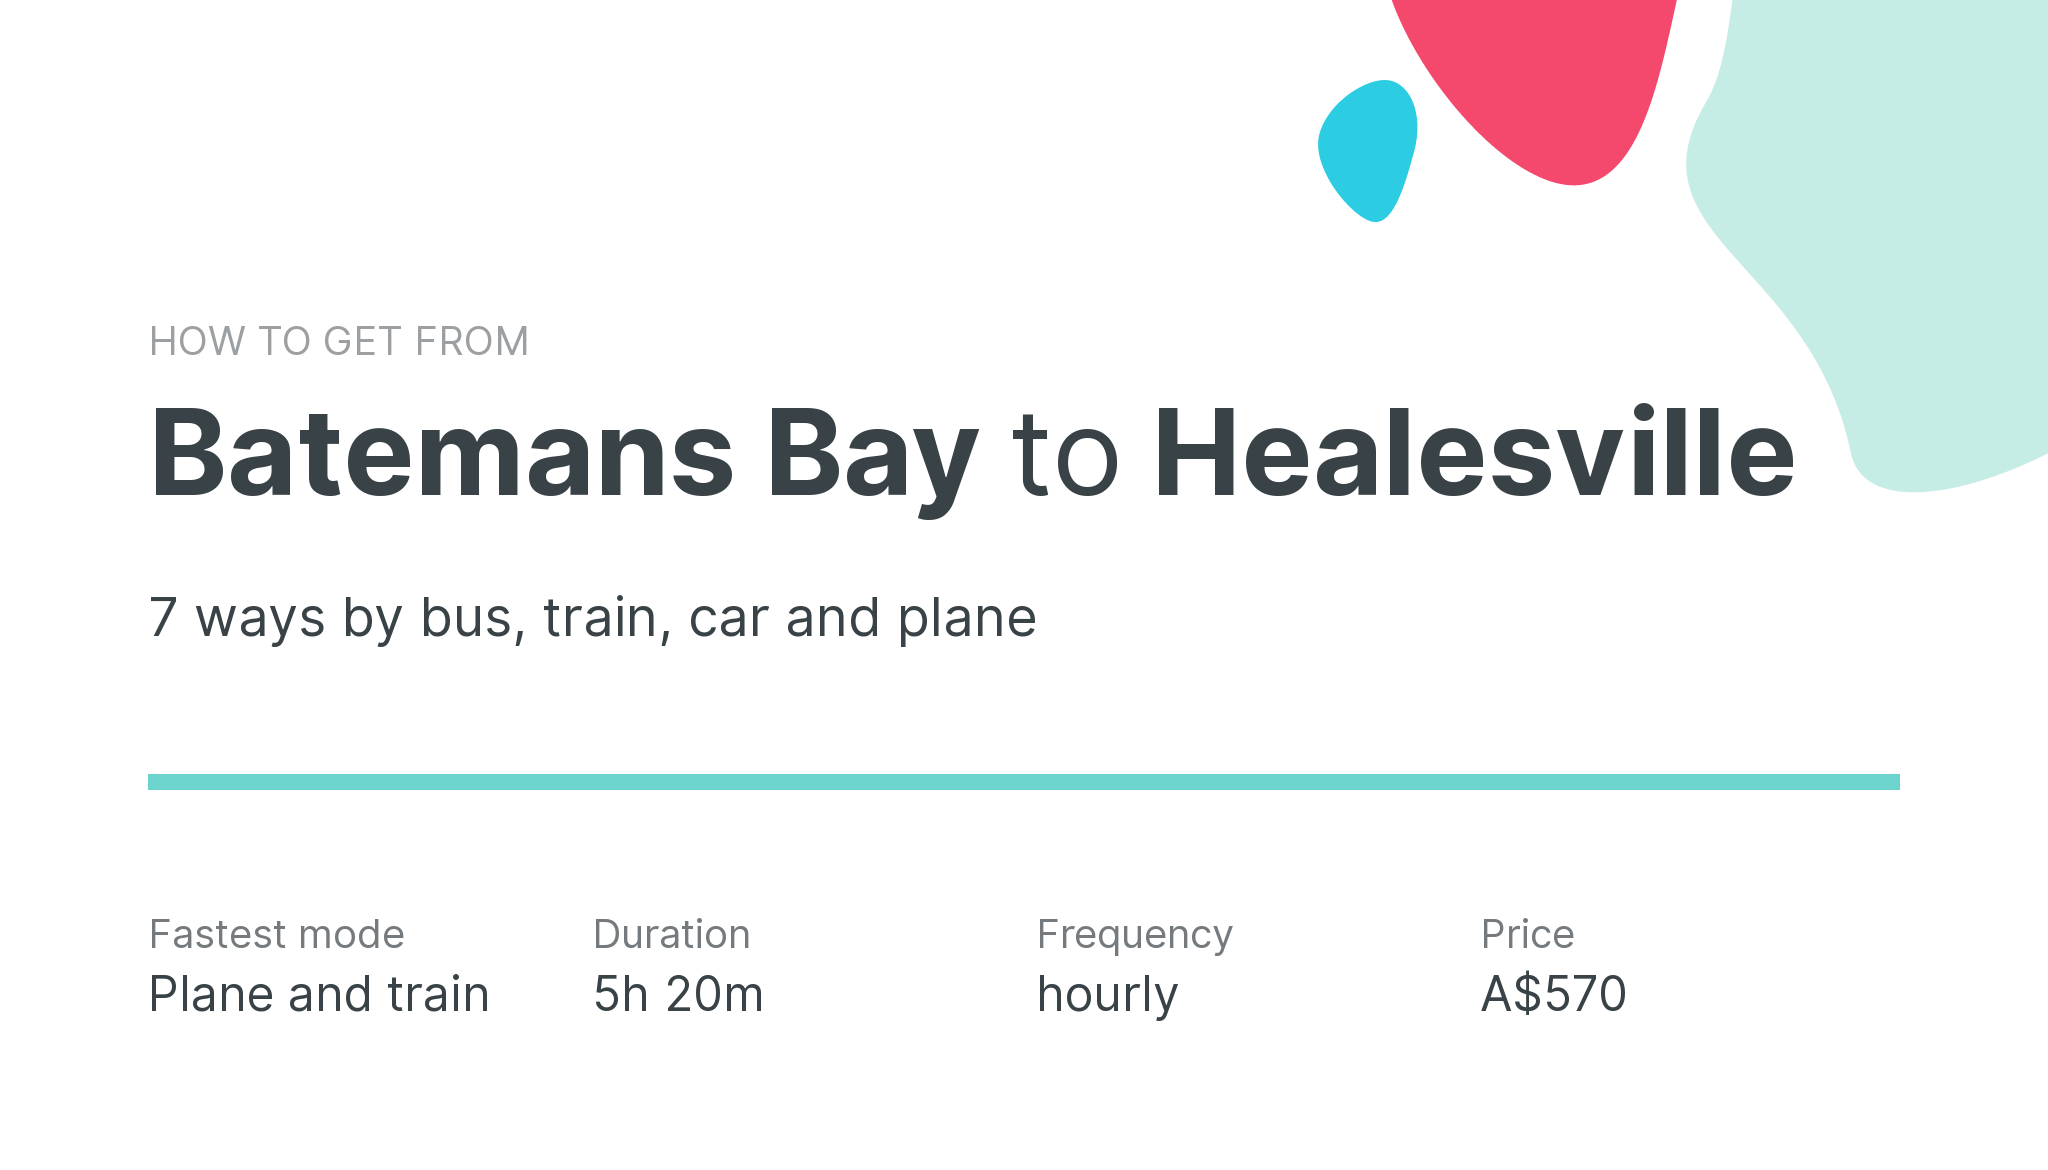 How do I get from Batemans Bay to Healesville